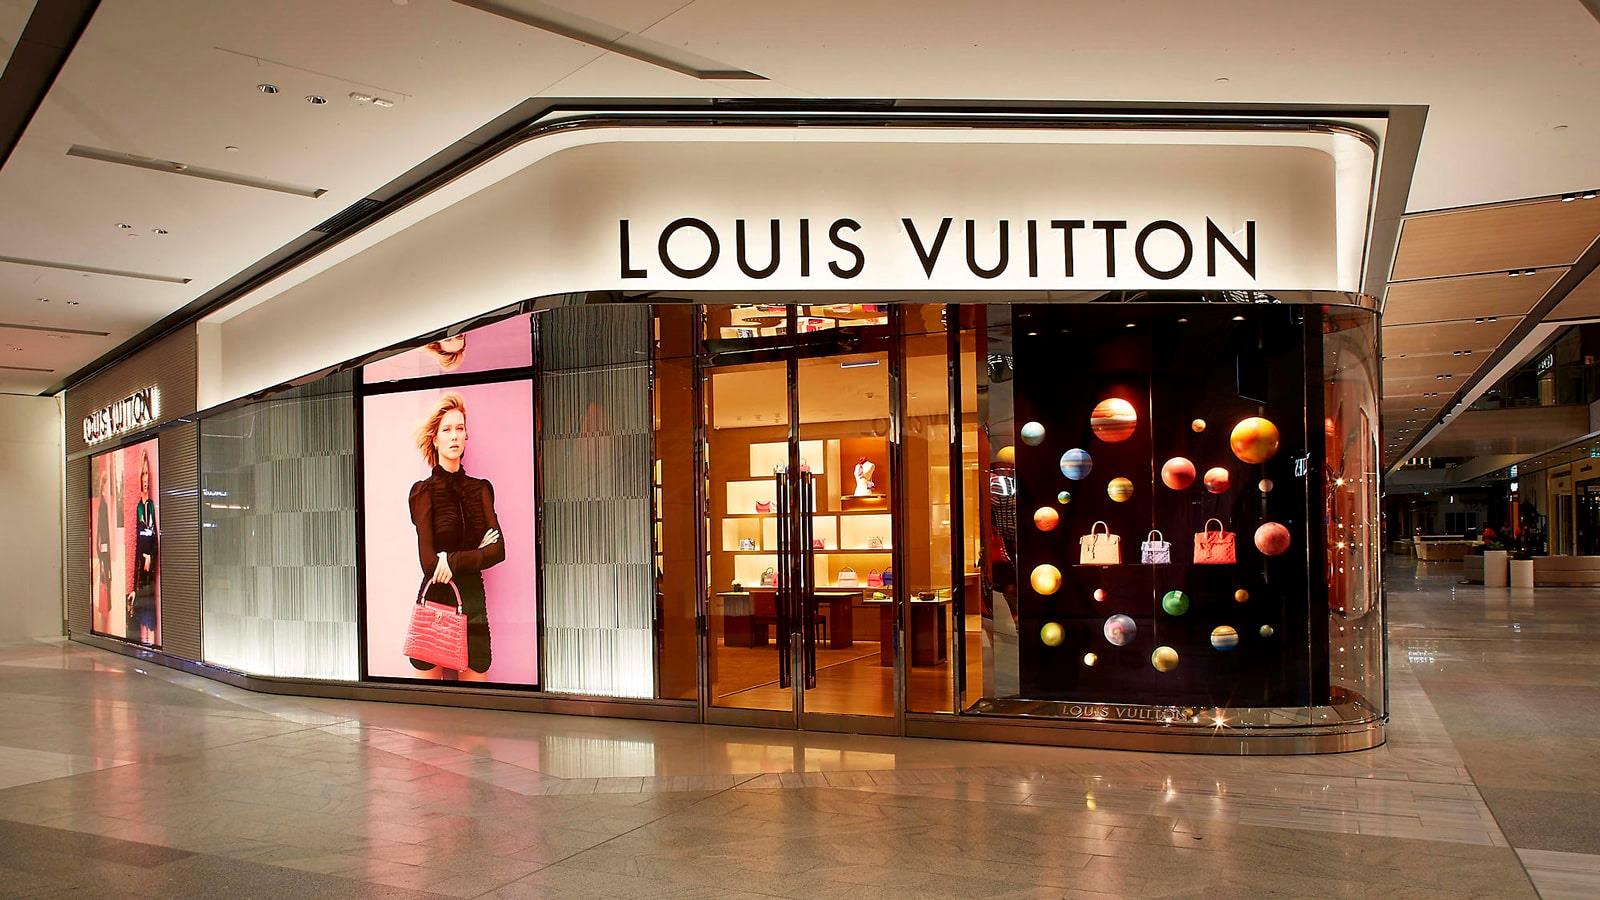 Louis Vuitton butik inde i et indkøbscenter